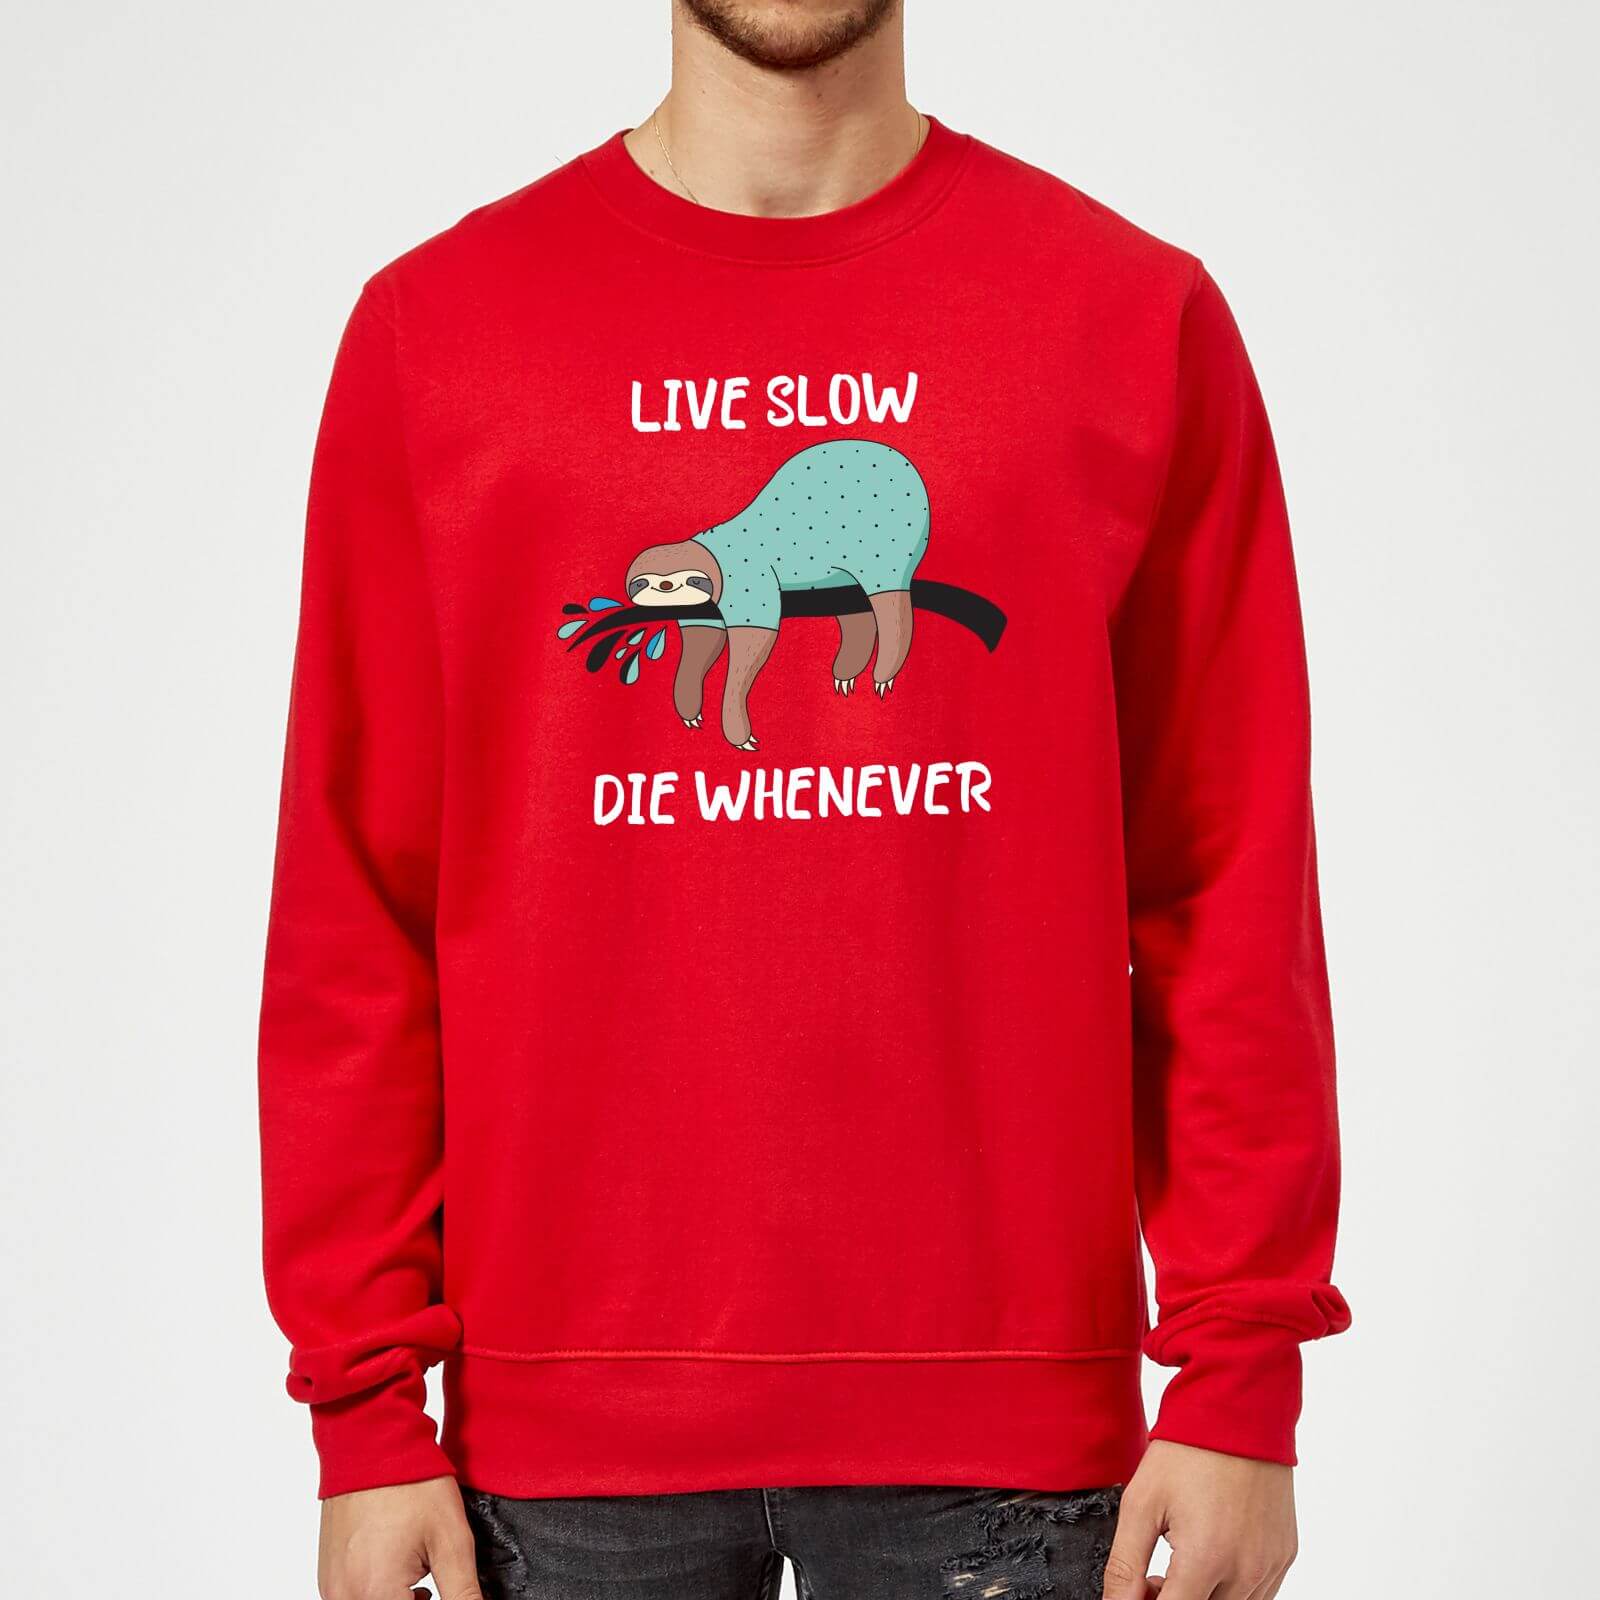 Live Slow Die WHenever Sweatshirt - Red - M - Red